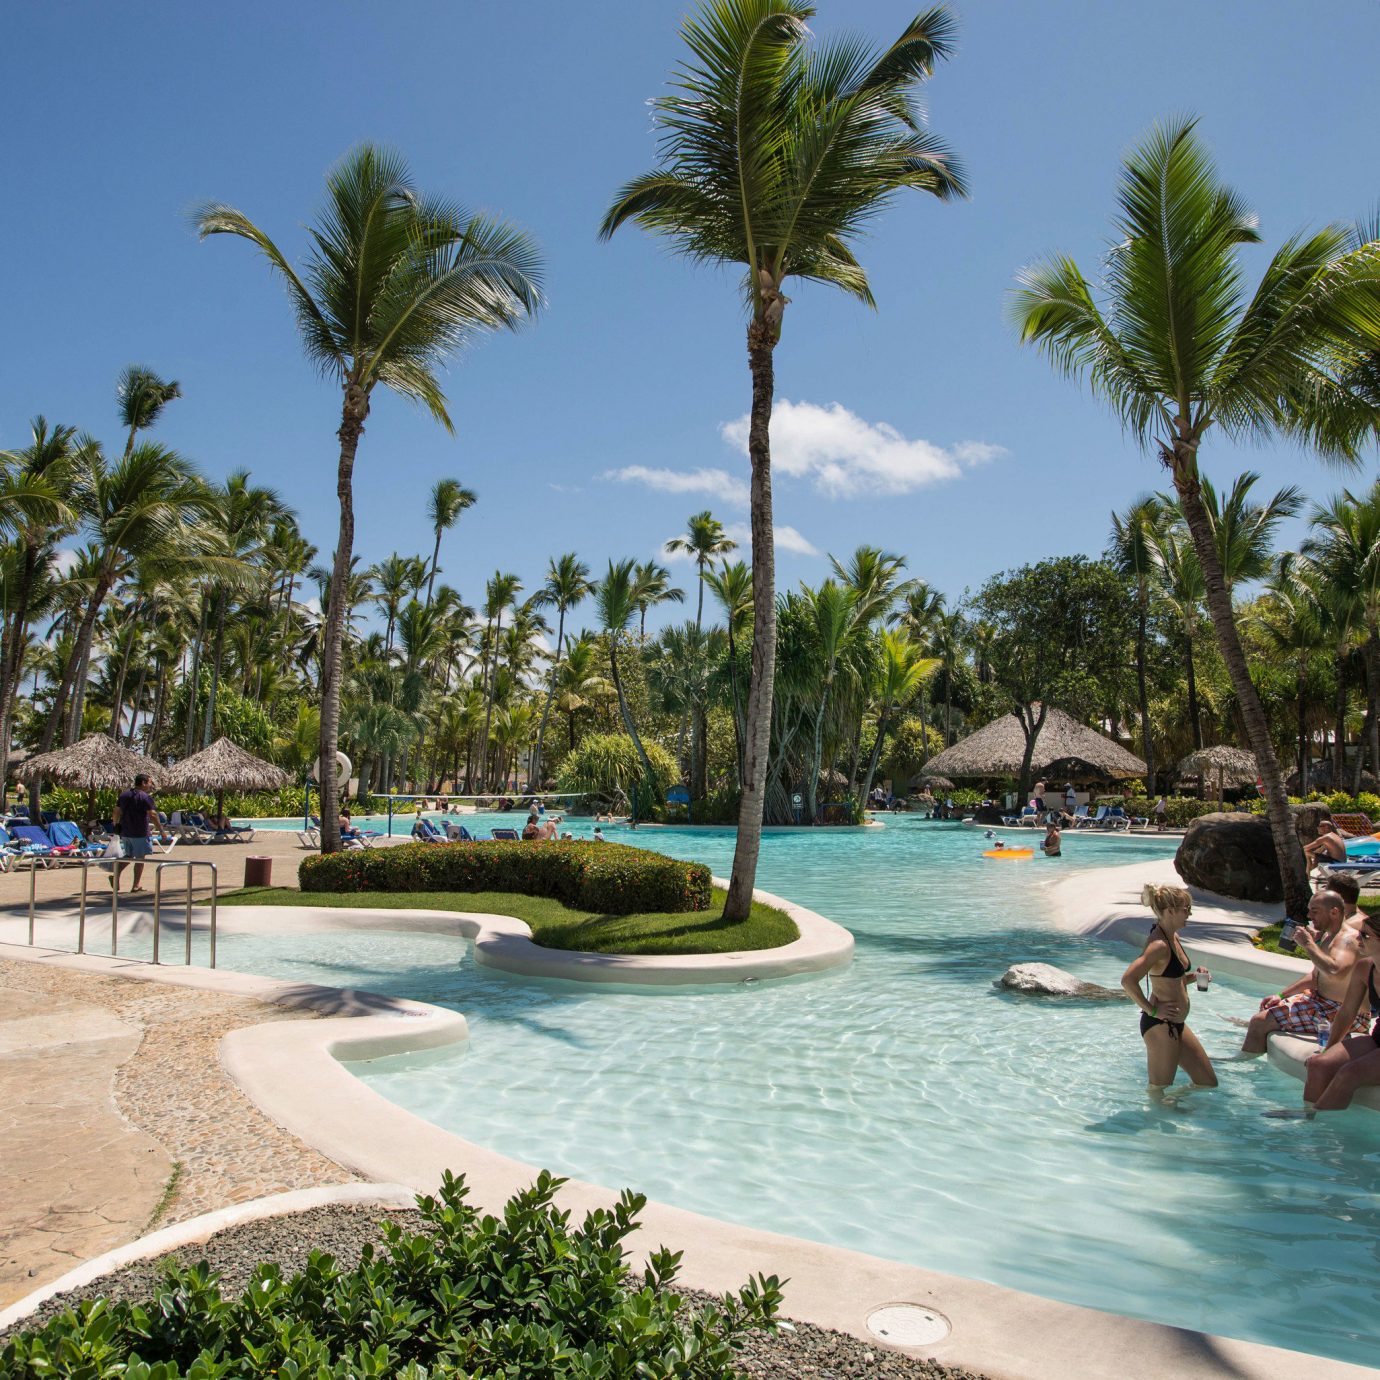 tree sky palm leisure swimming pool Resort Pool Beach arecales caribbean resort town Sea Lagoon Water park tropics lined plant shore swimming